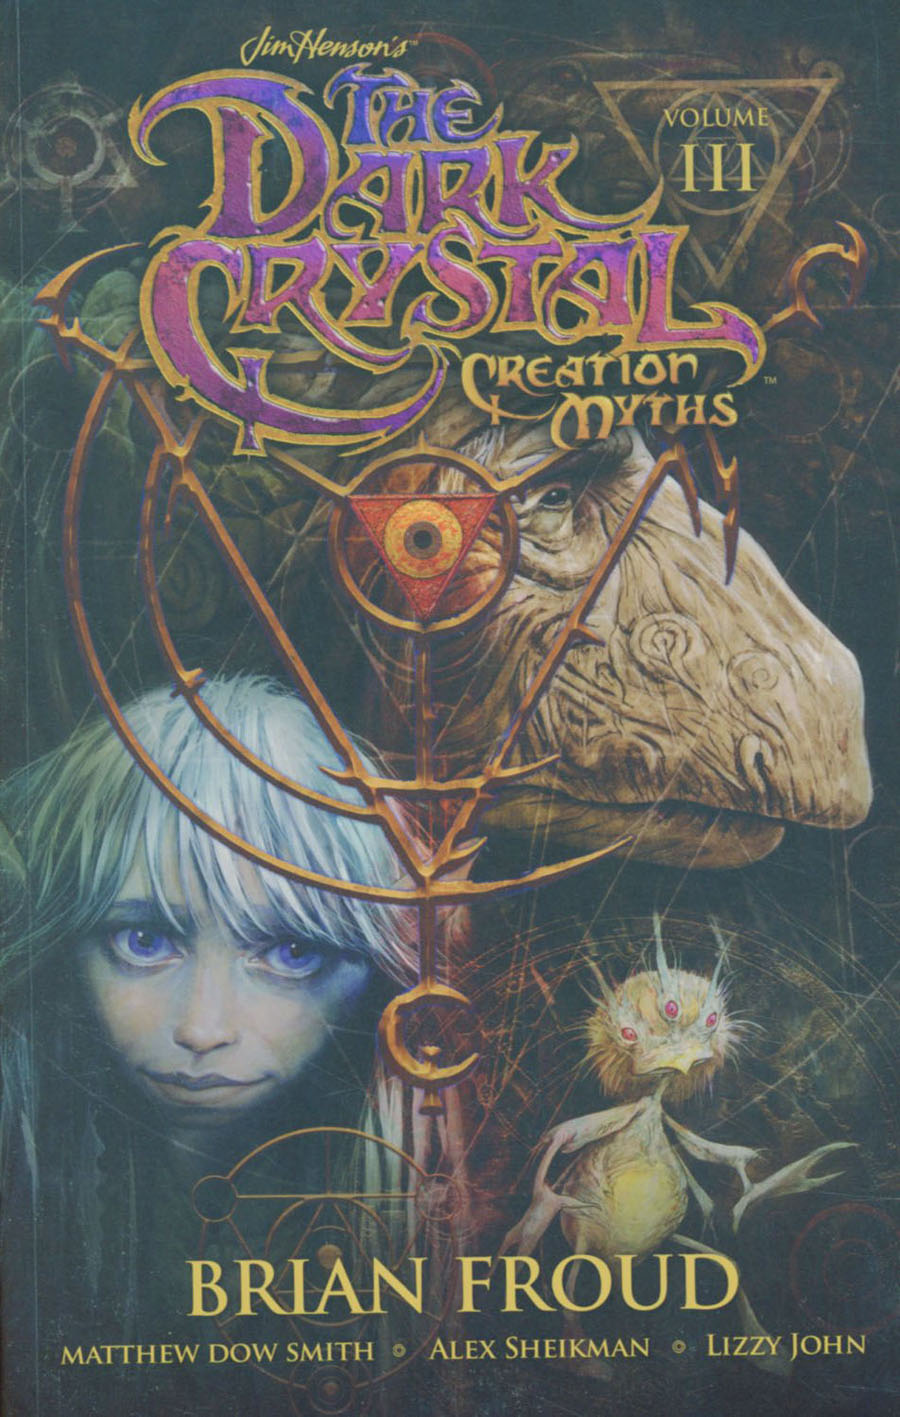 Jim Hensons Dark Crystal Creation Myths Vol 3 TP